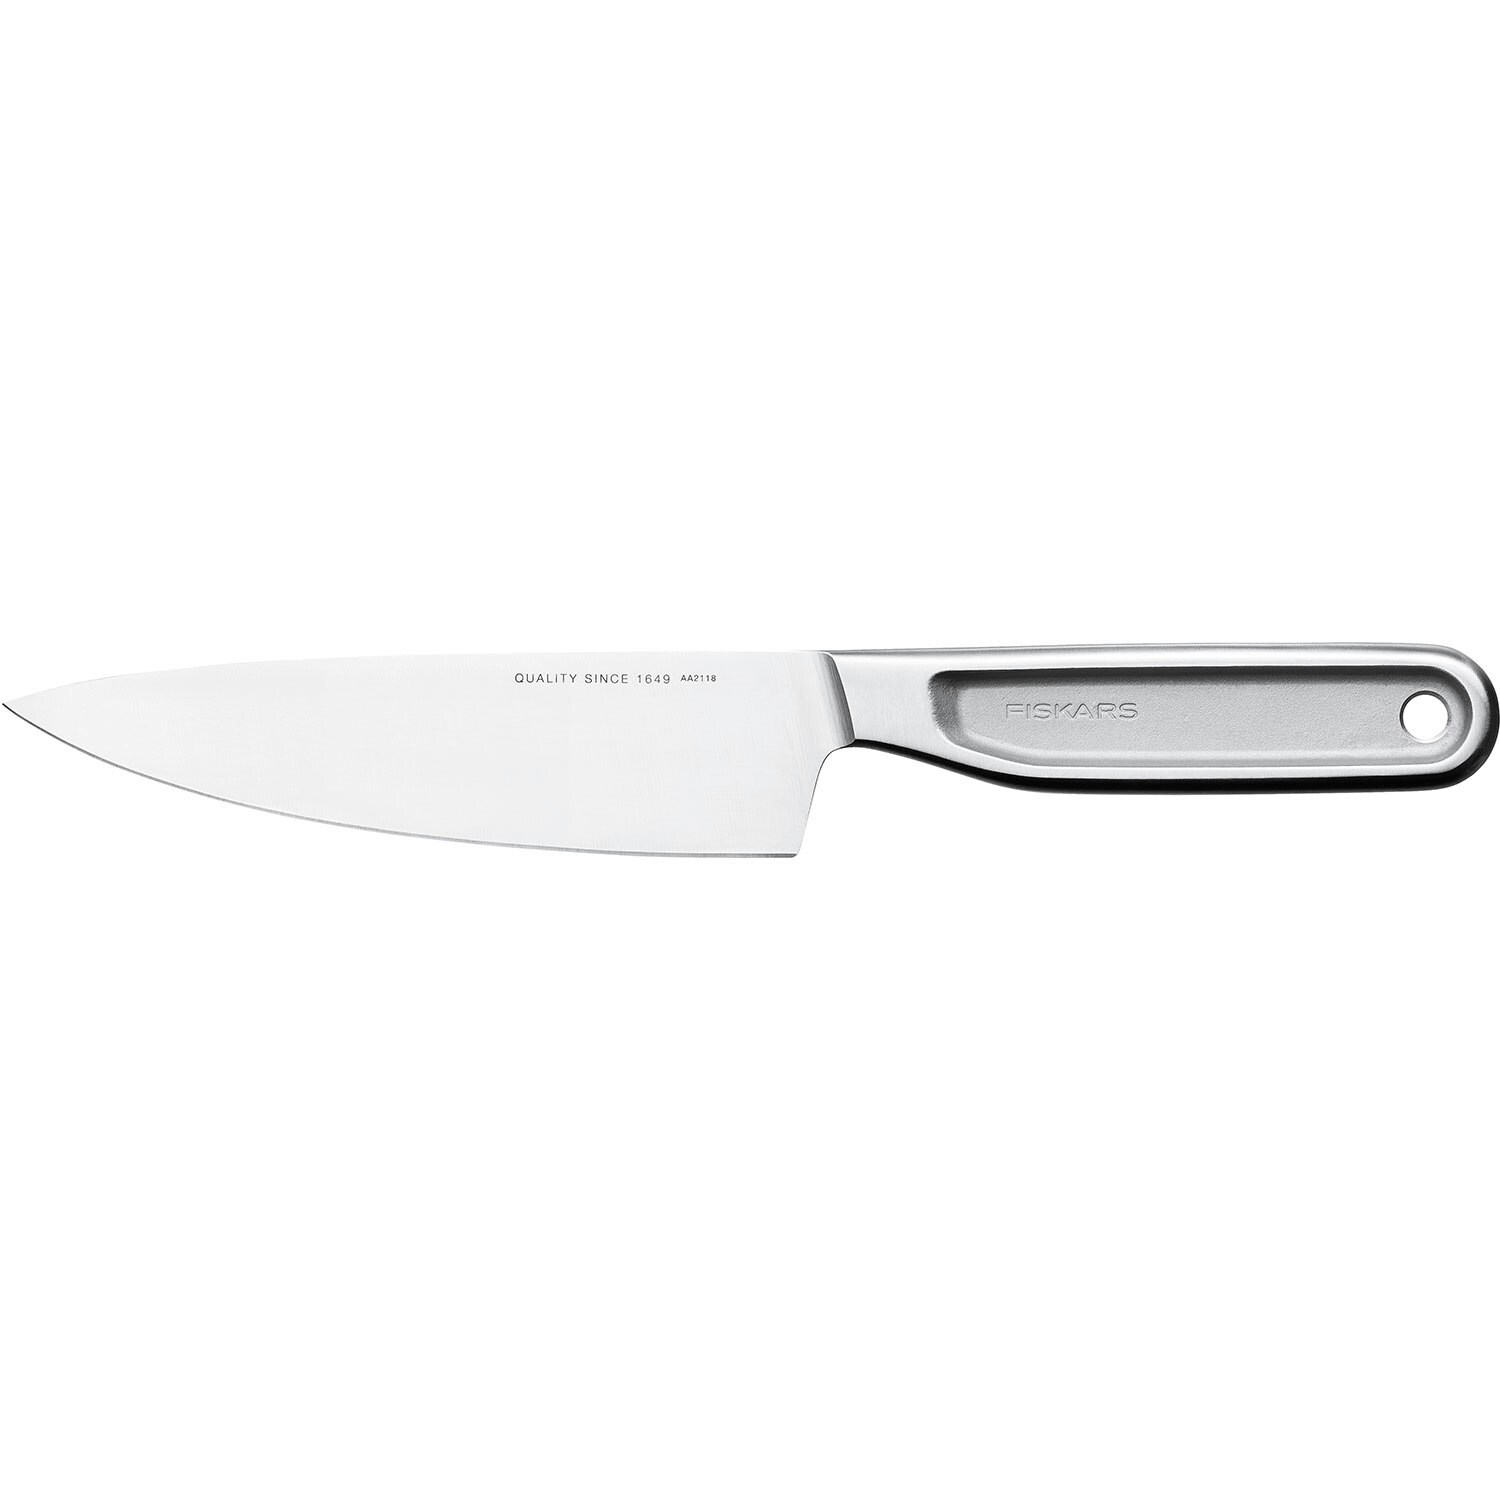 https://royaldesign.com/image/2/fiskars-all-steel-cook-knife-135-cm-0